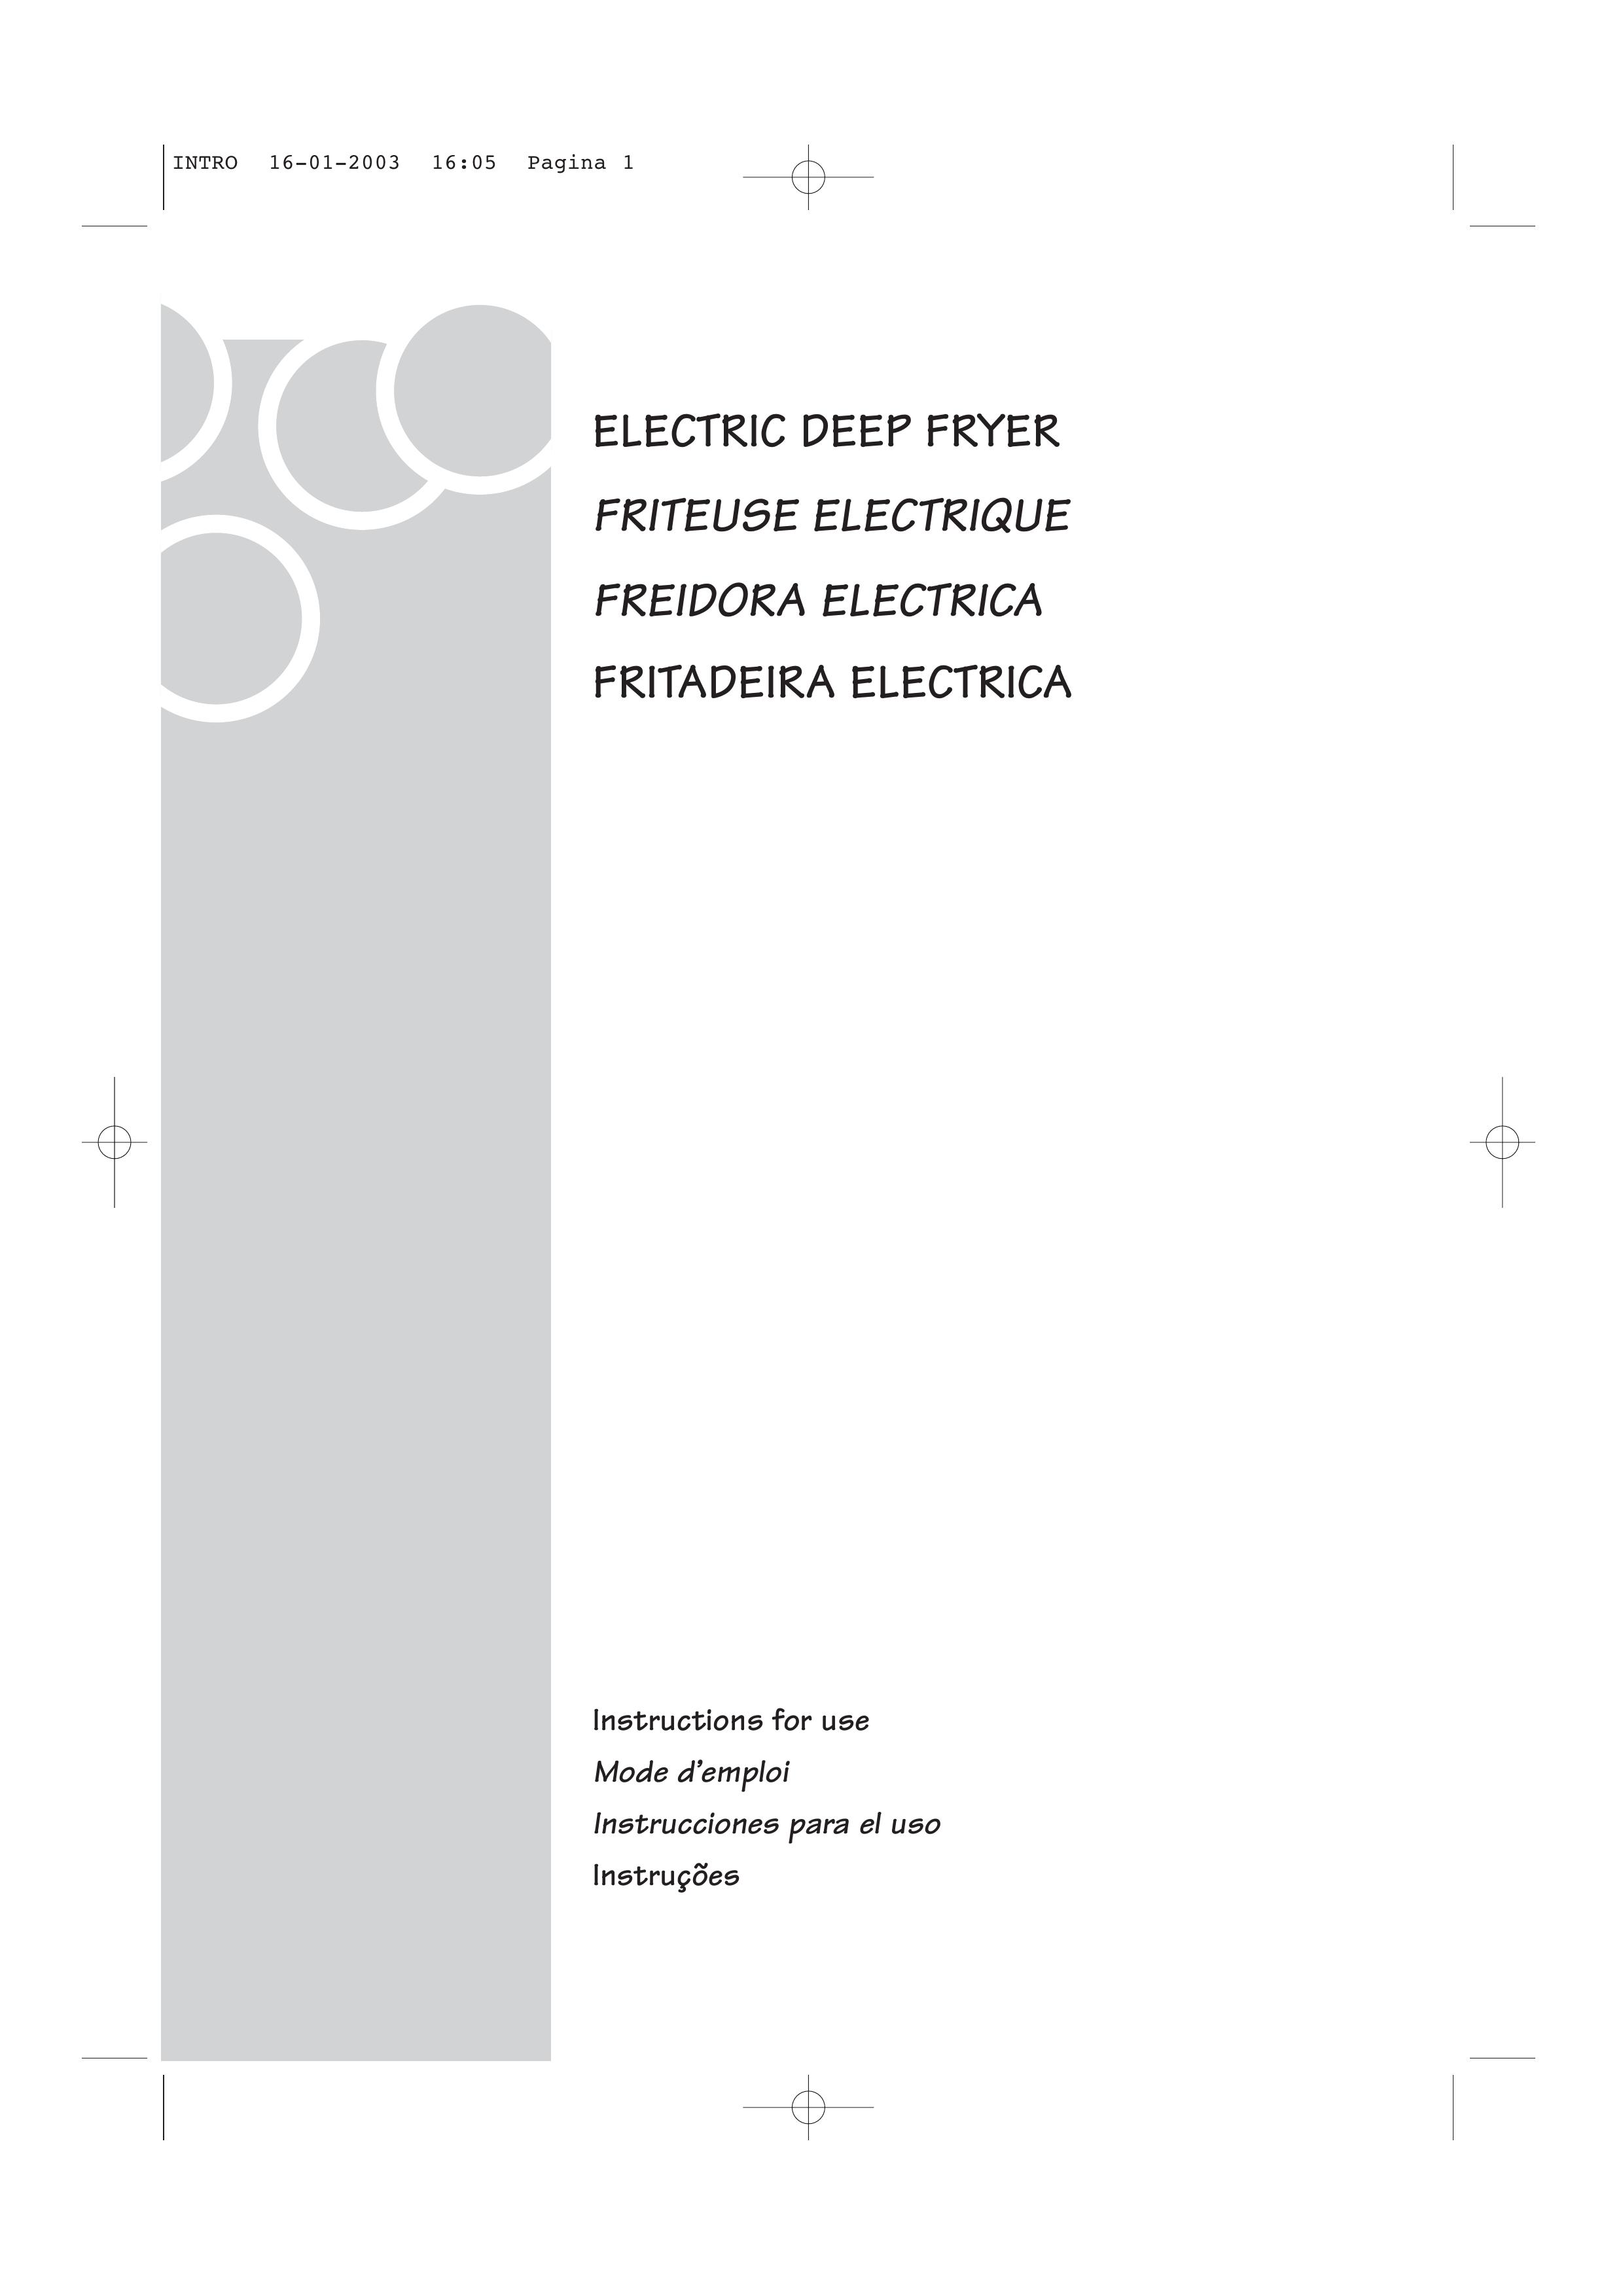 DeLonghi Electric Deep Dryer Clothes Dryer User Manual